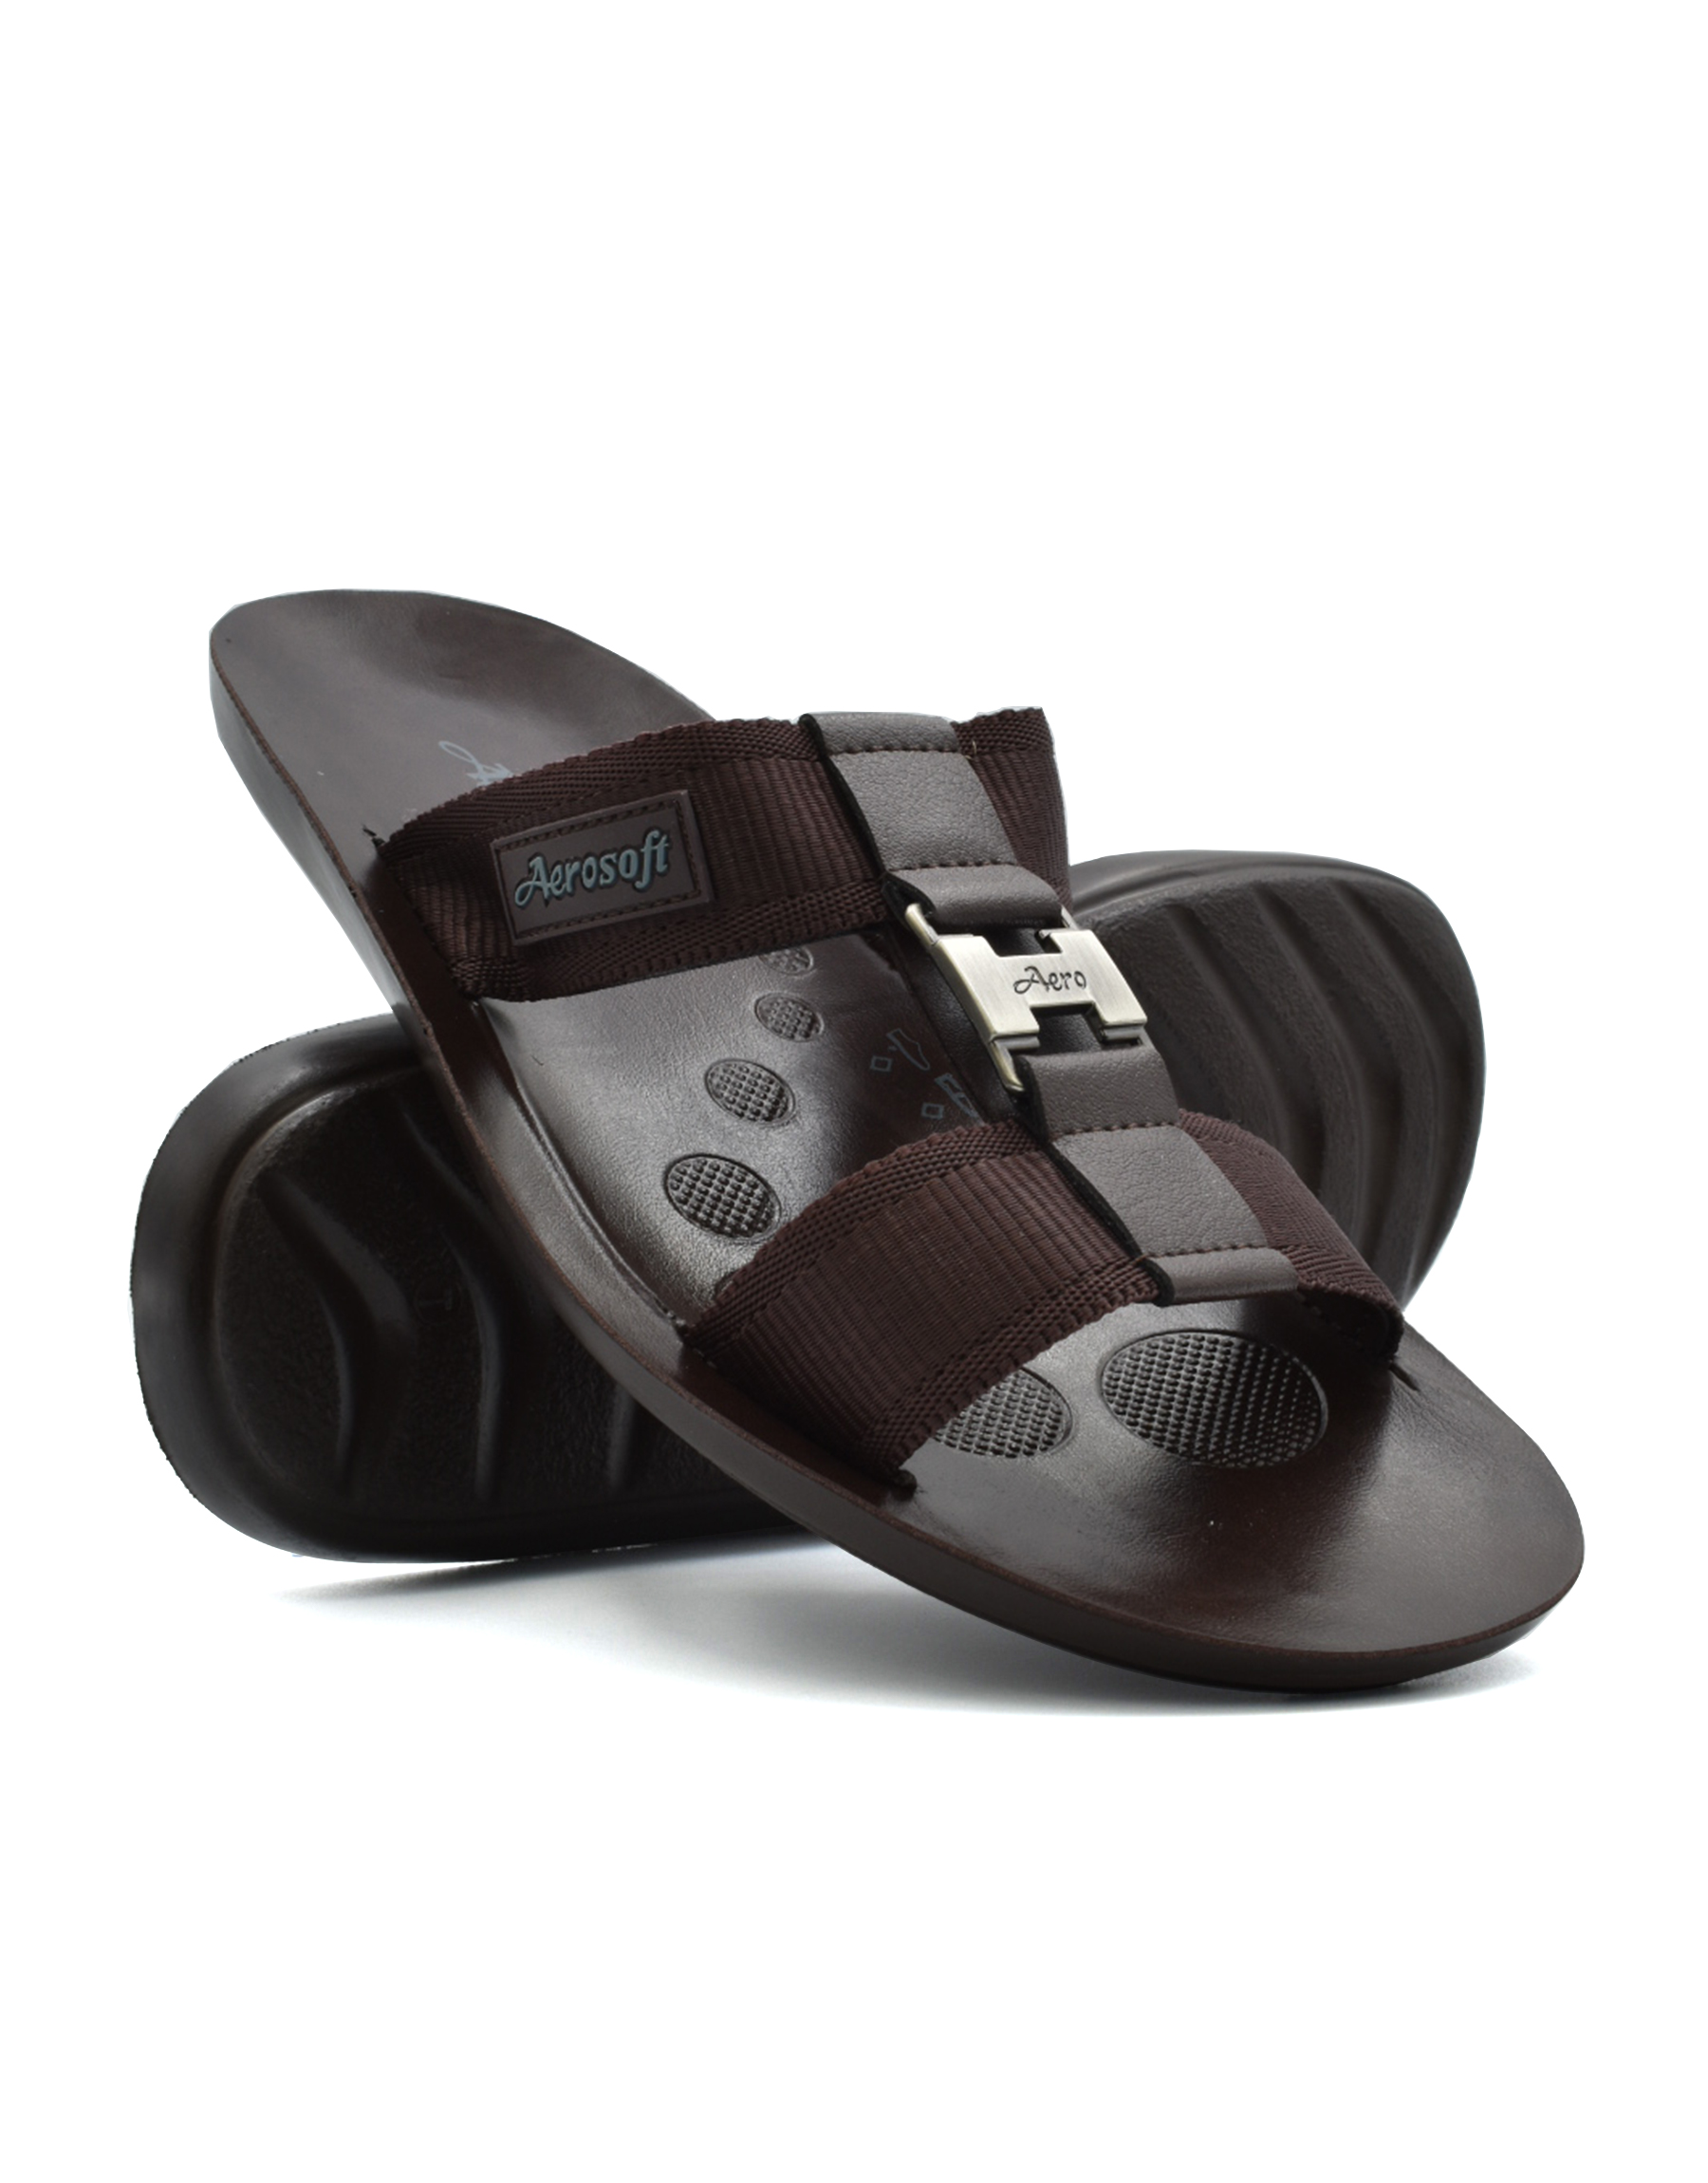 Thaisoft Mens Slippers M0704 | AeroSoft Footwear